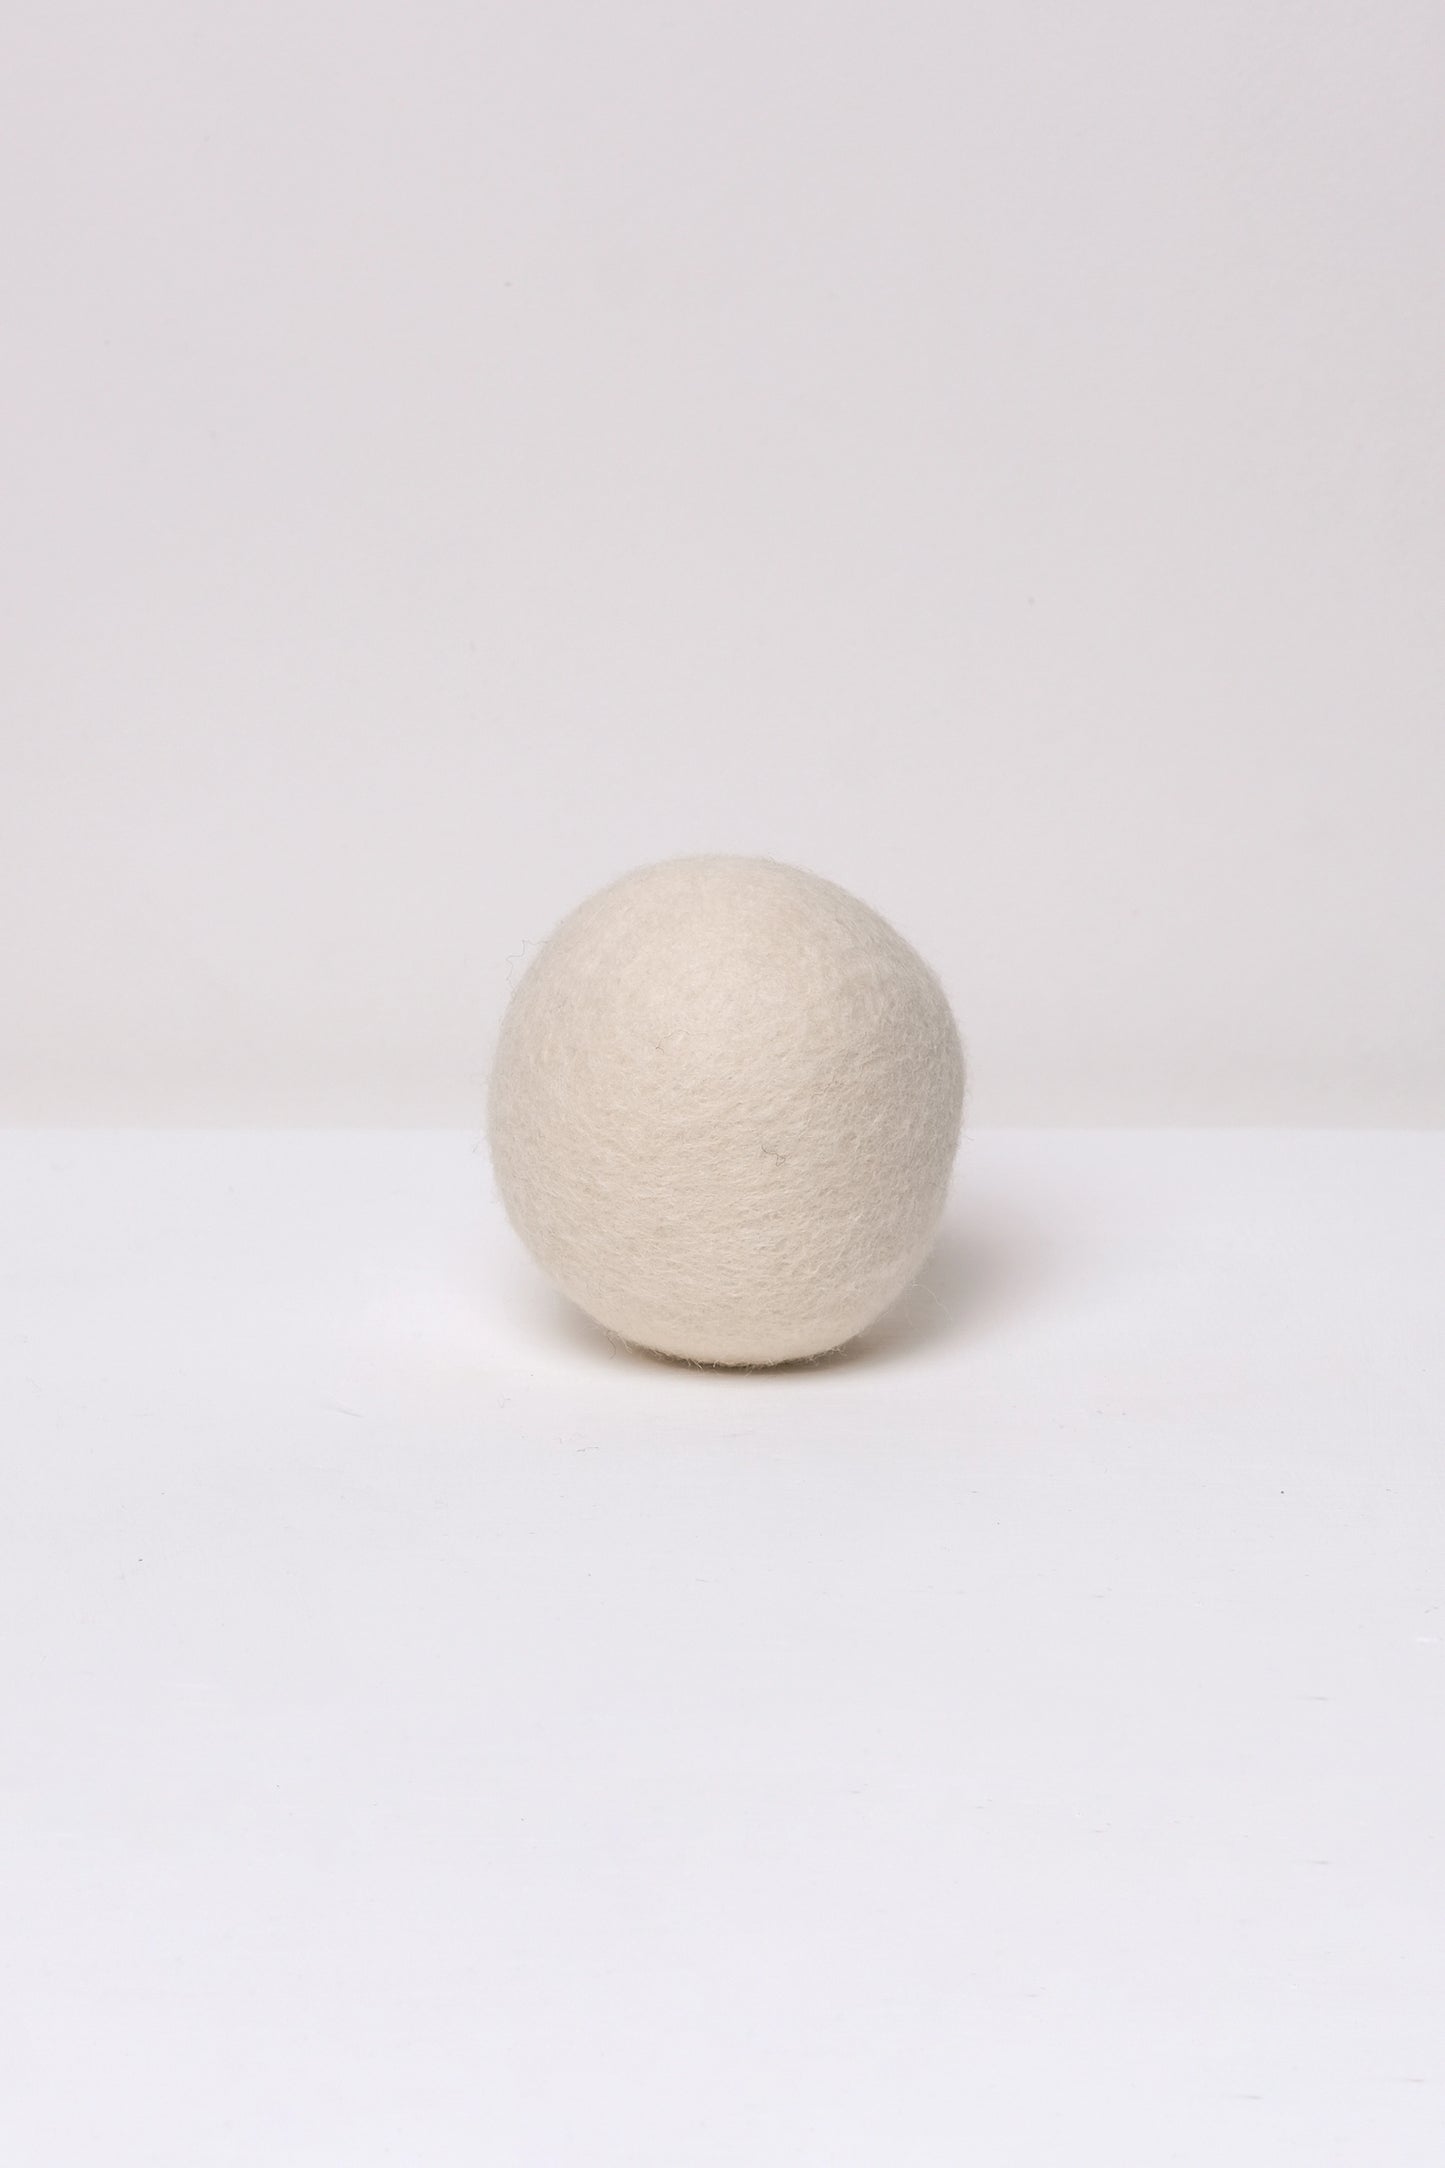 New Zealand Wool Dryer Balls, Compostable